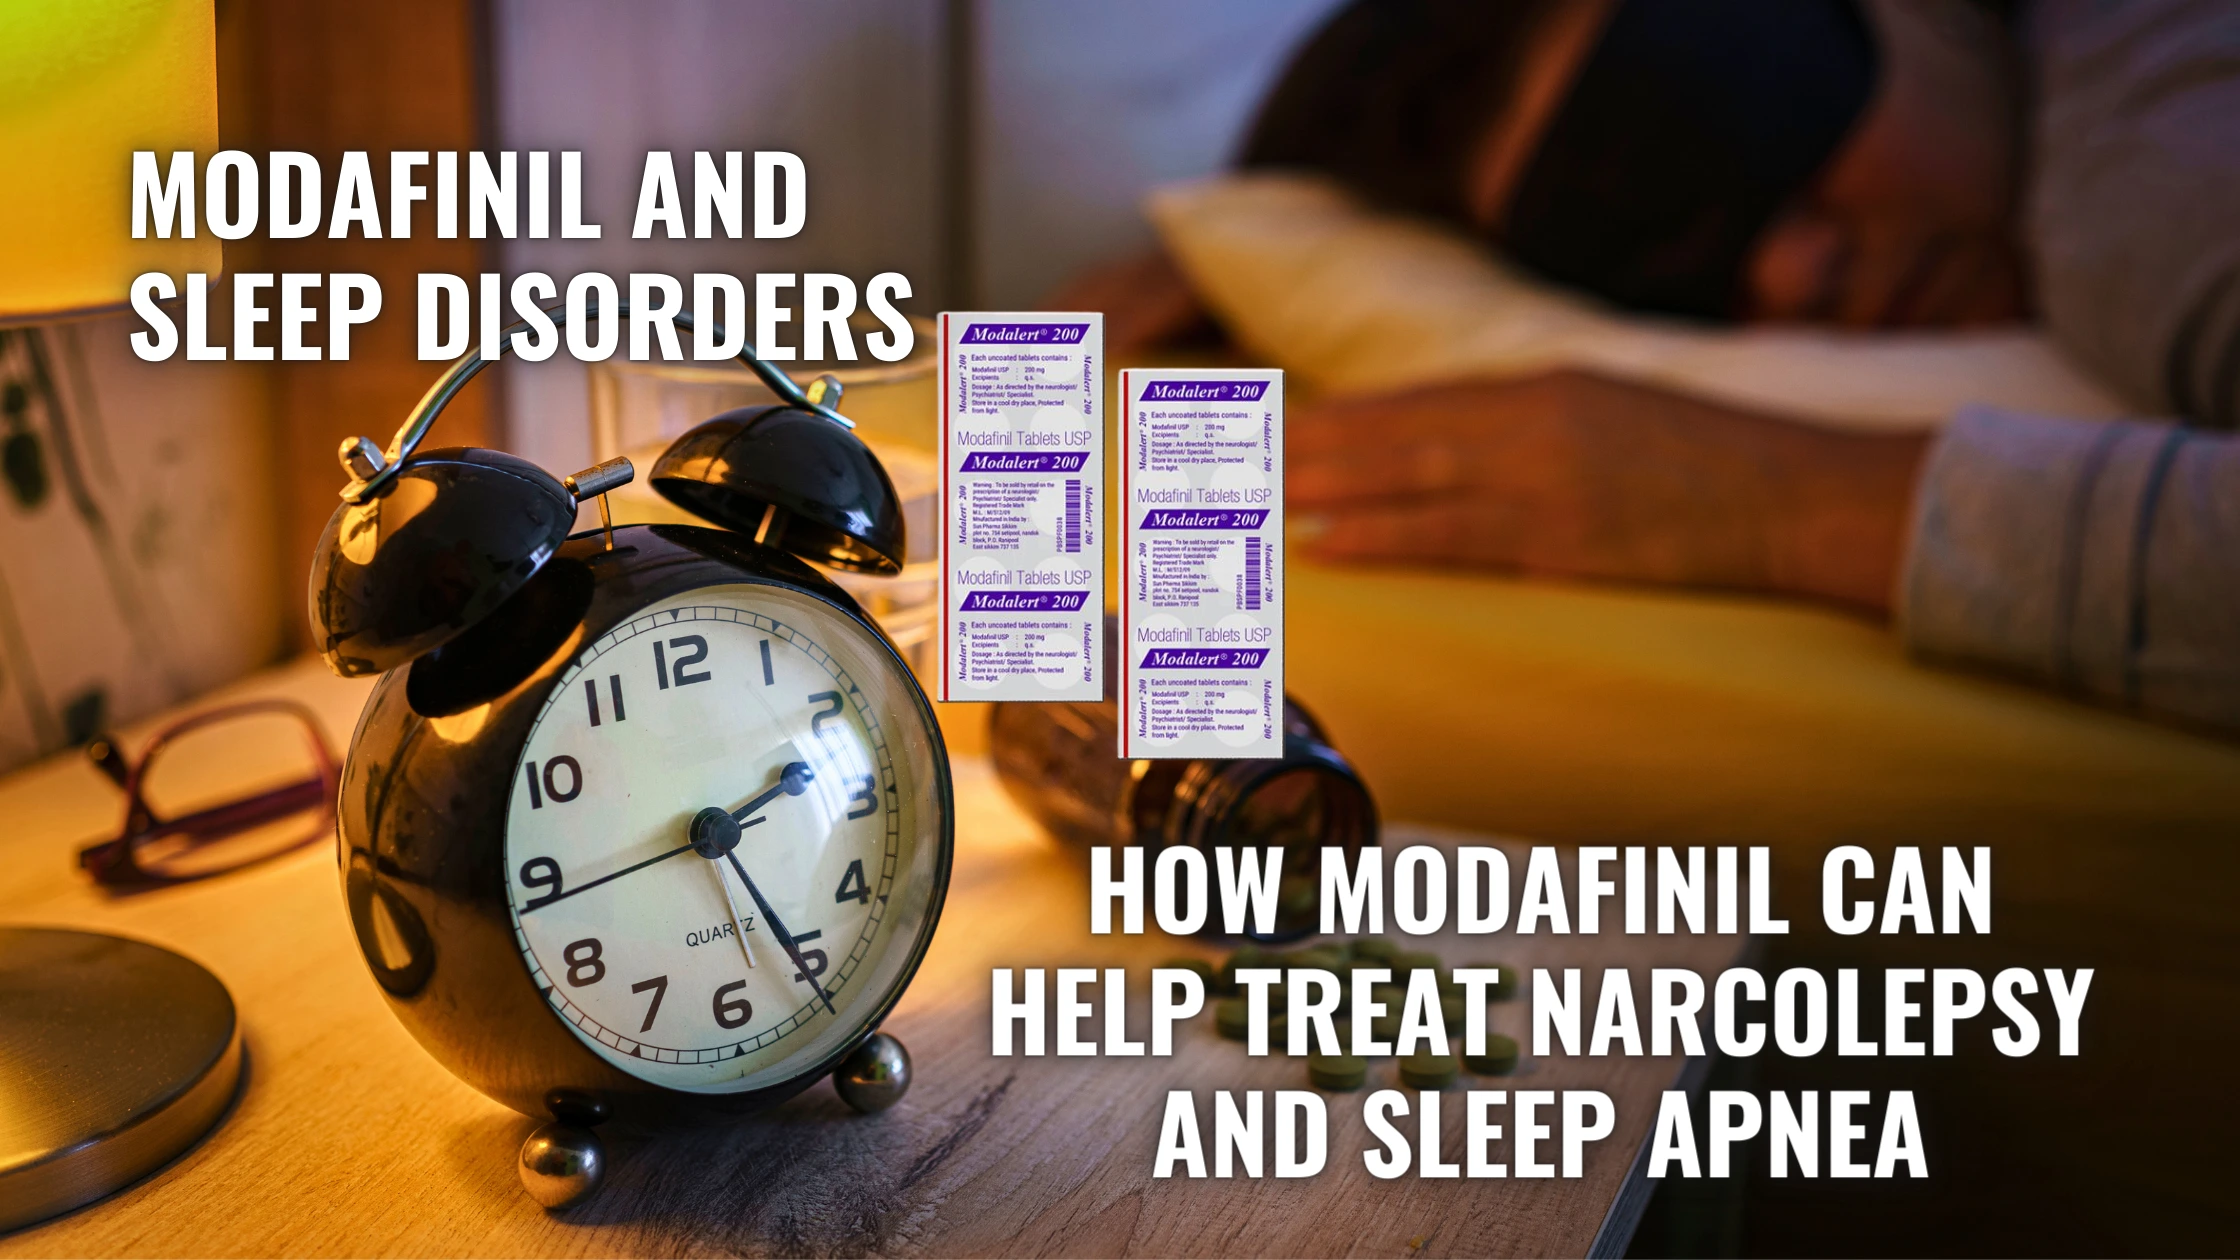 Modafinil and Sleep Disorders: How Modafinil Can Help Treat Narcolepsy and Sleep Apnea